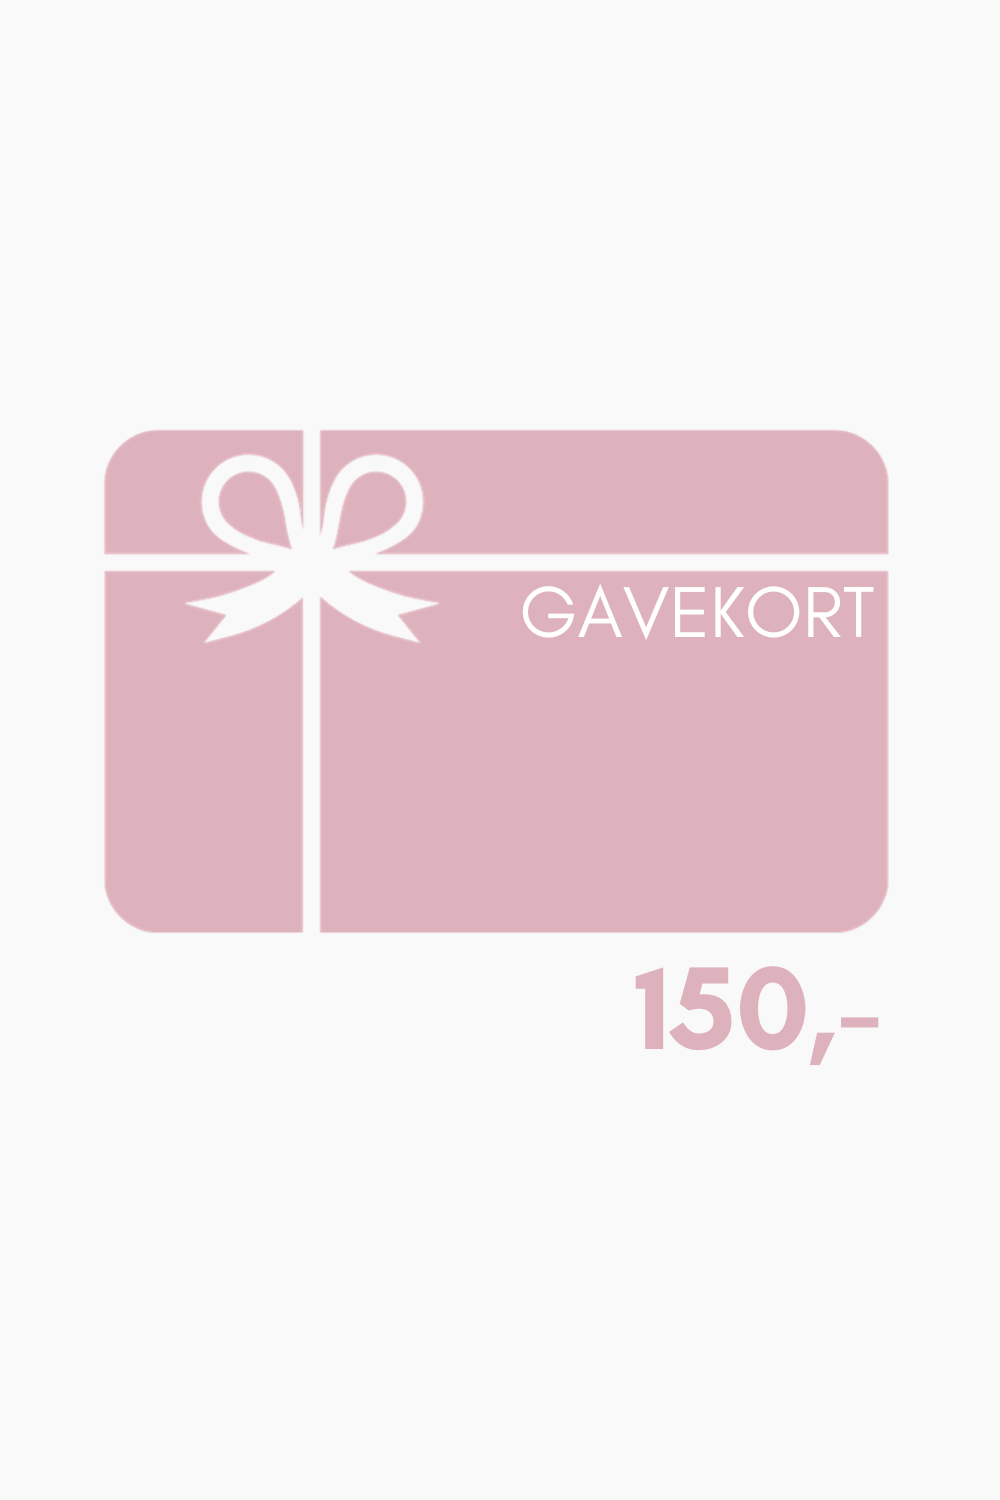 QNTS Gavekort 150 kr - 150,00 kr